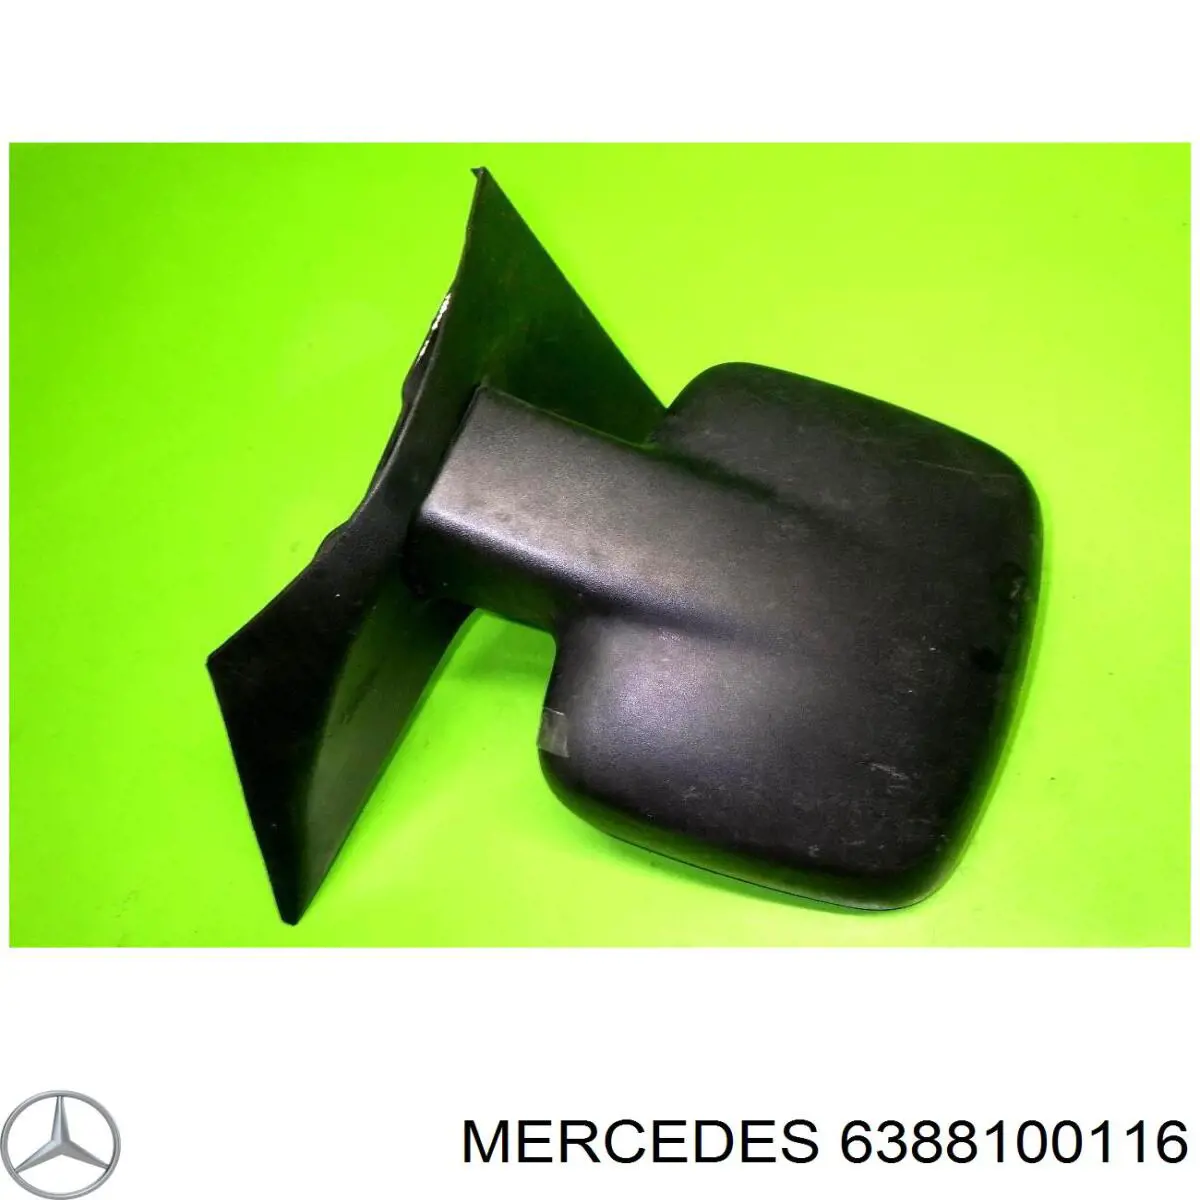 6388100116 Mercedes espejo retrovisor derecho